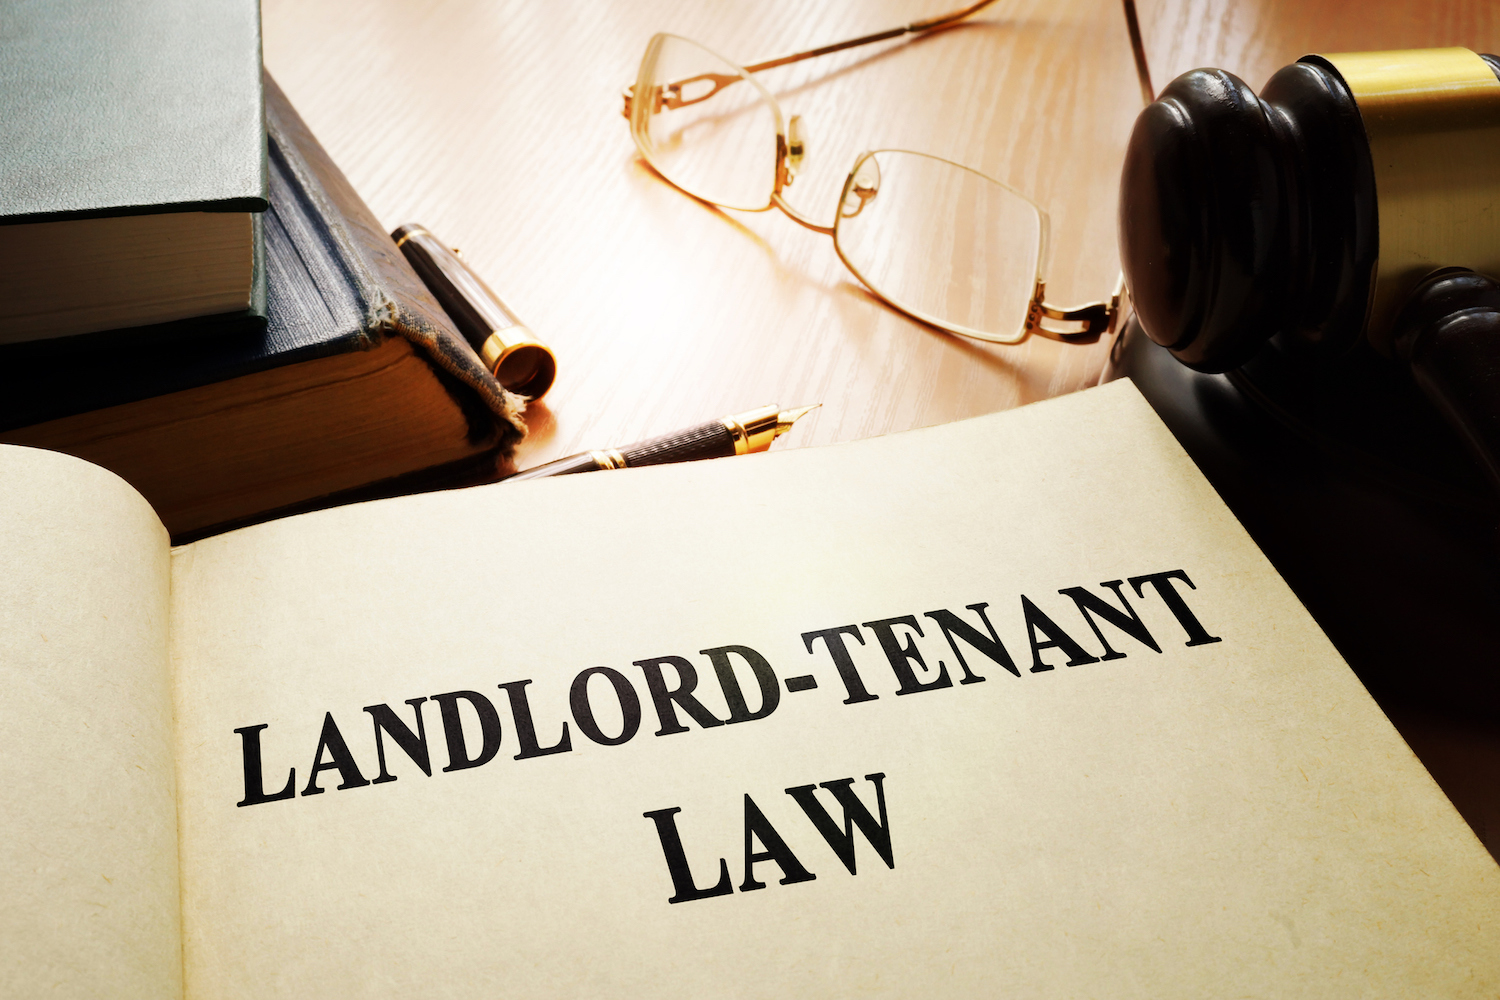 Landlord Tenant Lease Law